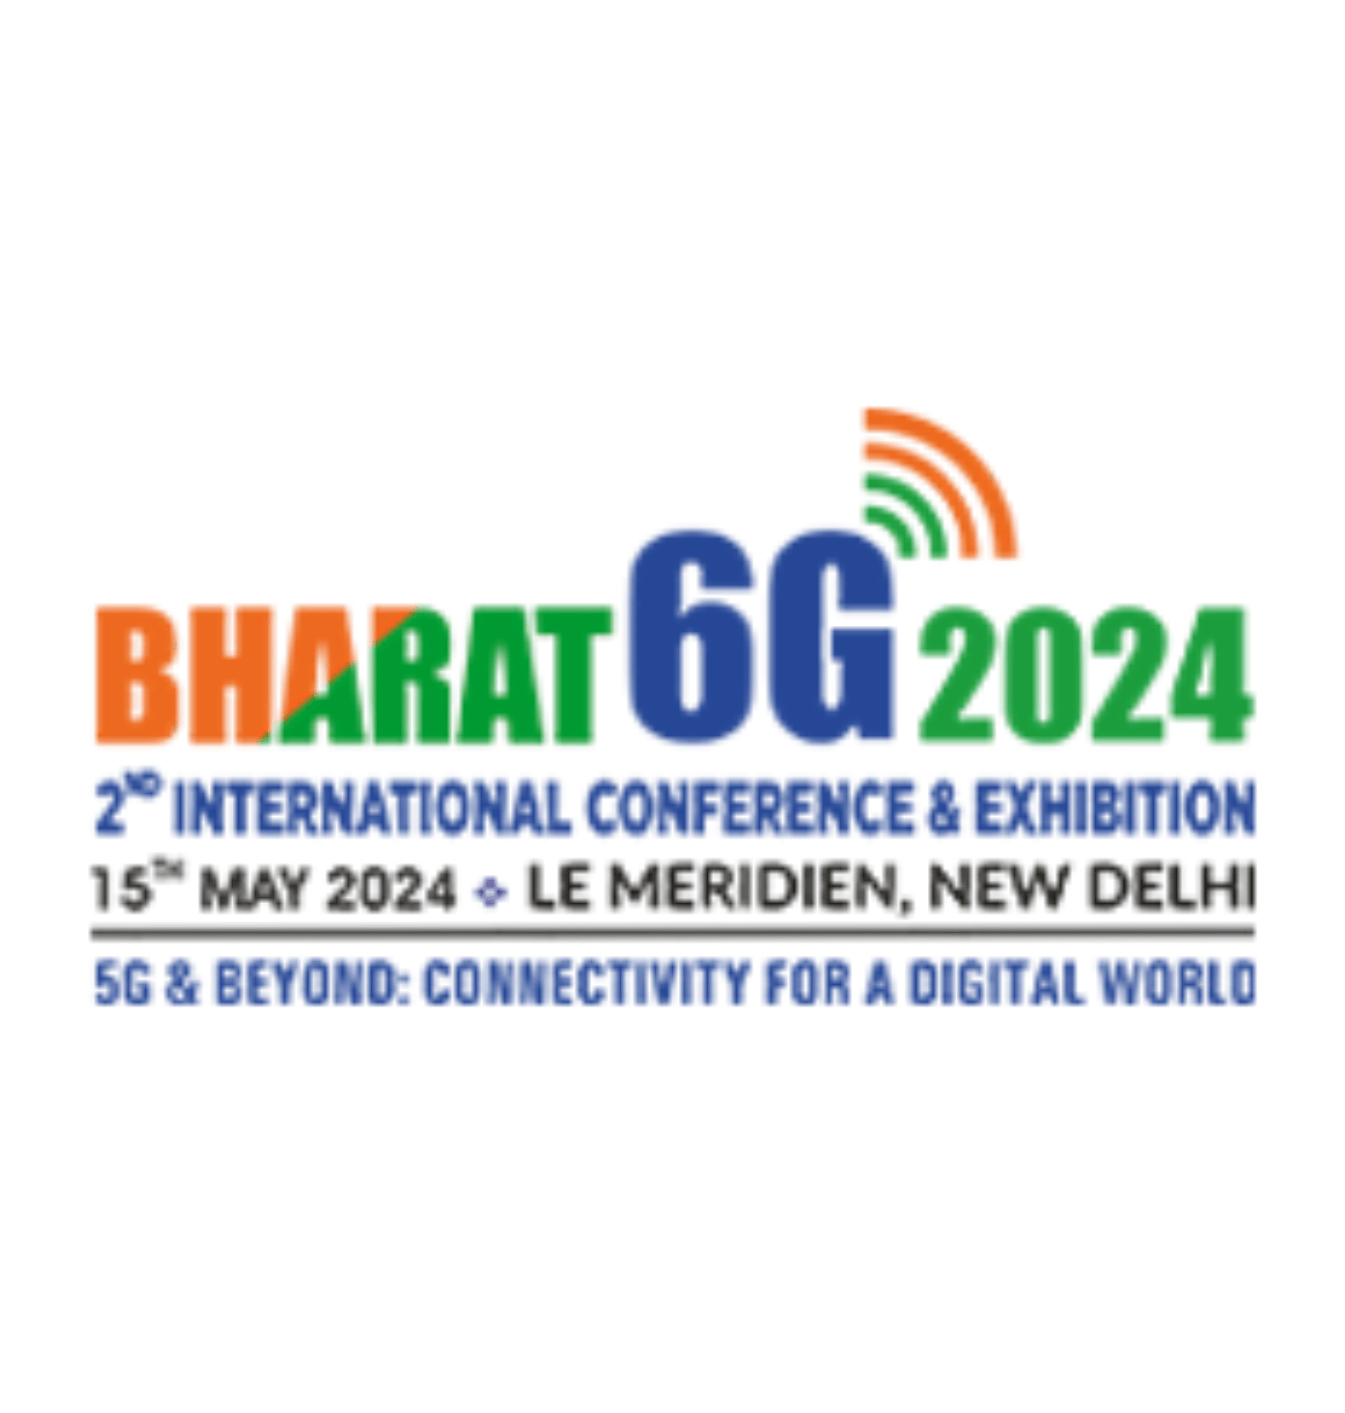 Bharat 6G 2024